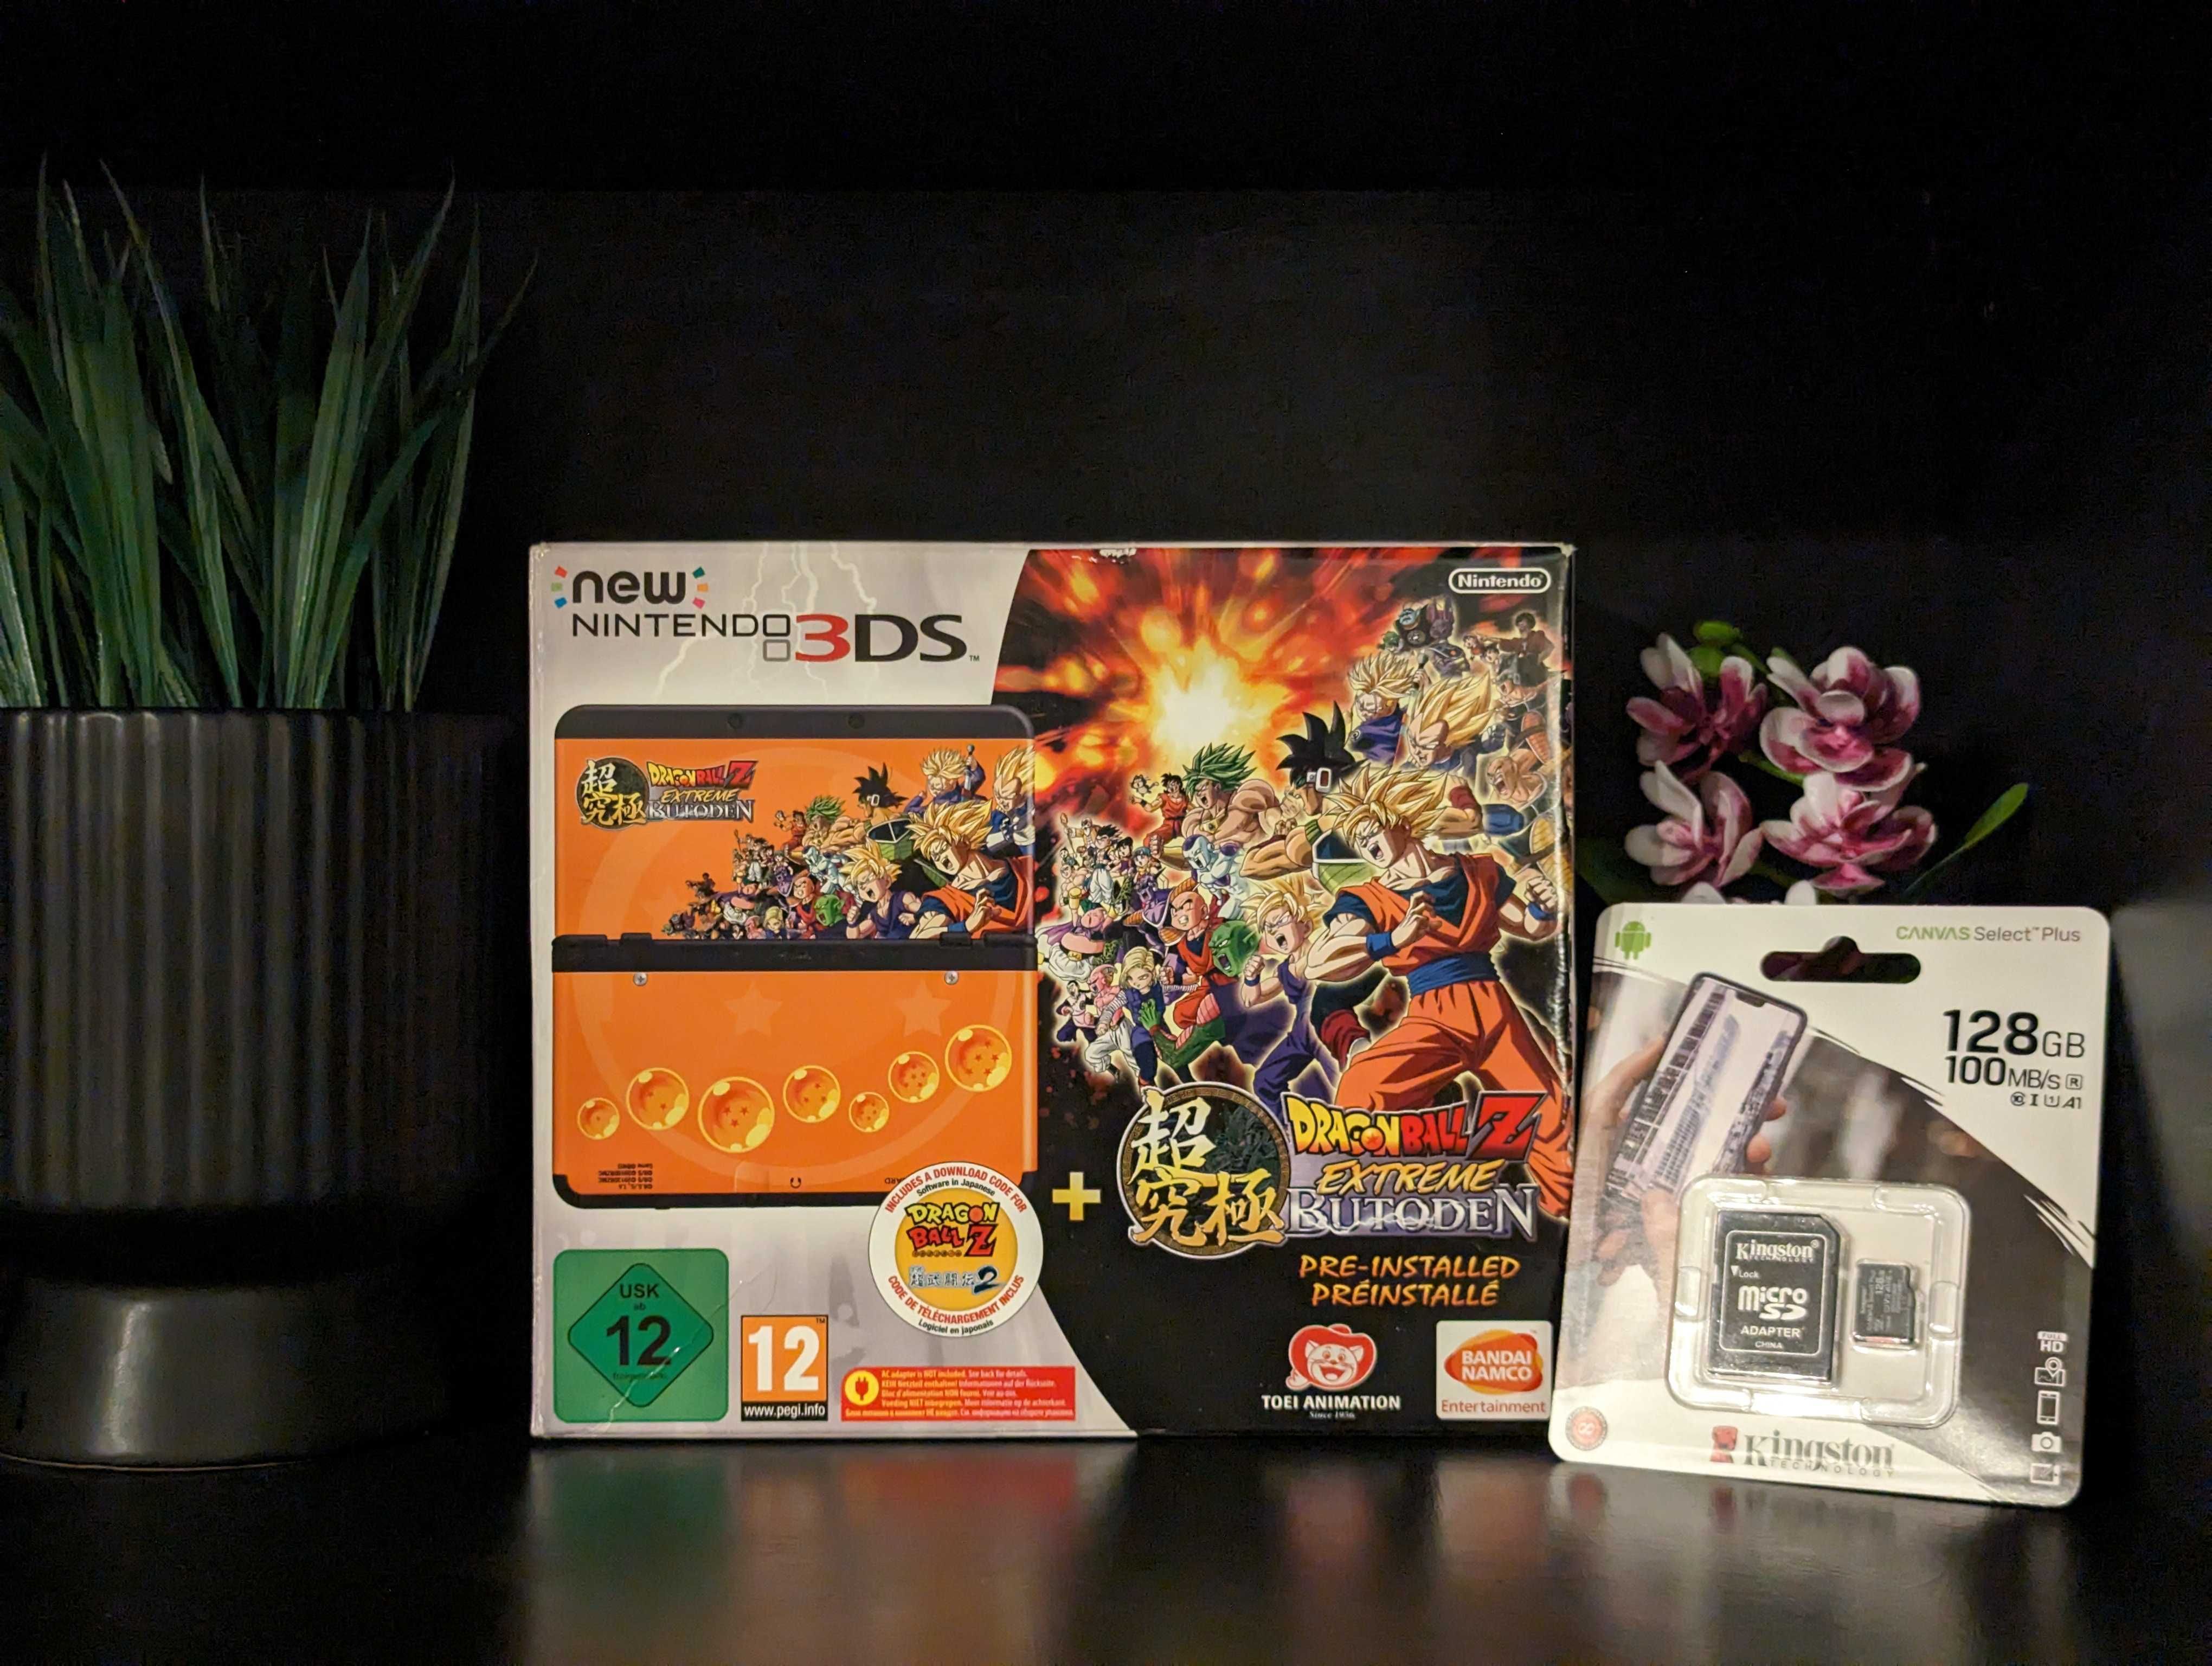 Consola Nintendo NEW 3DS Modata - Dragon Ball Z Extreme Butoden 128GB